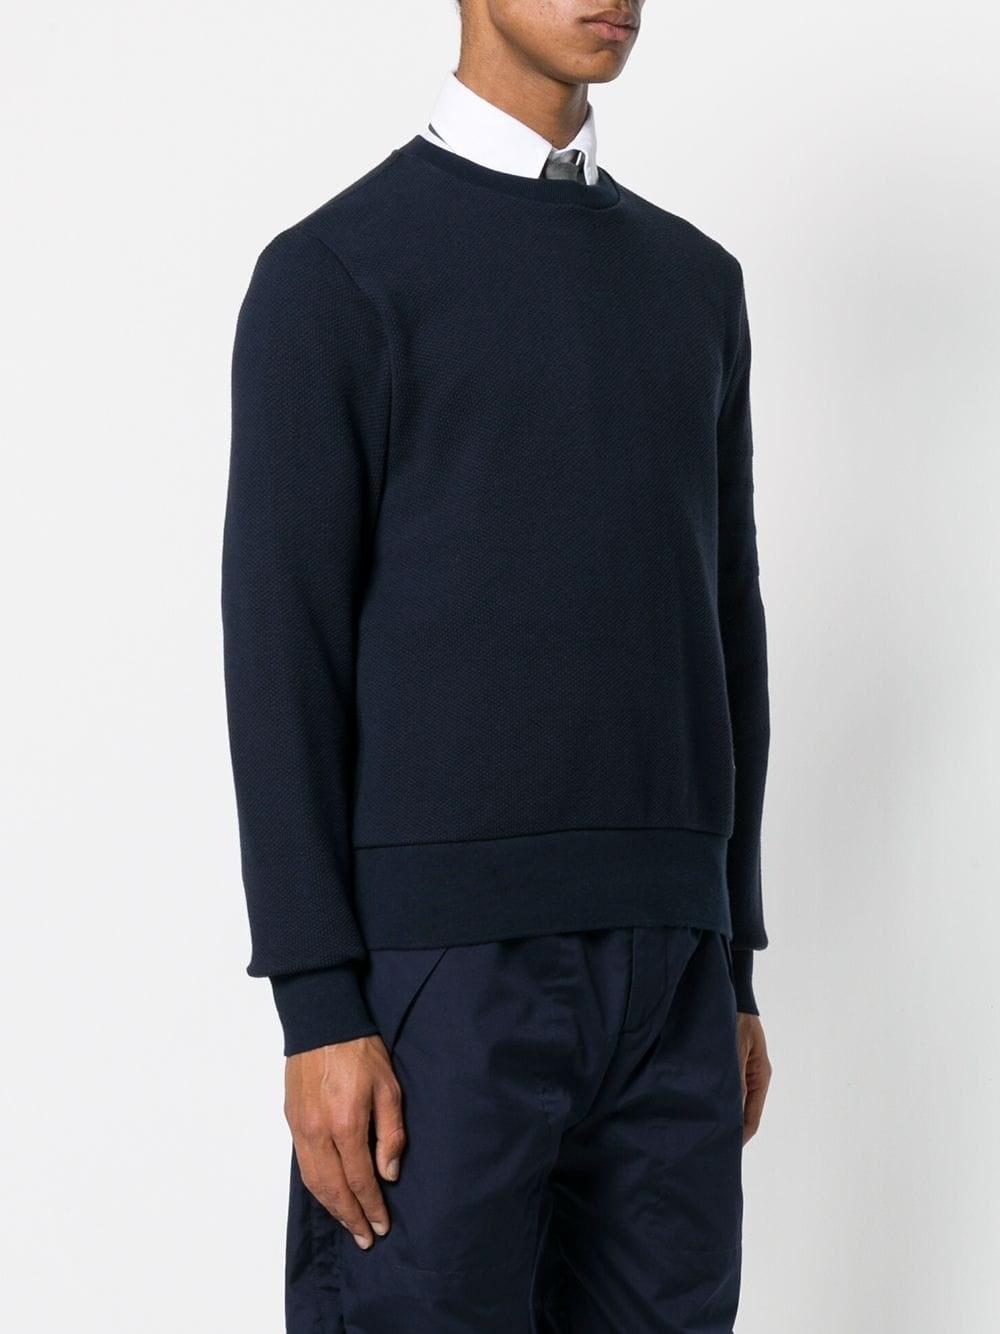 Thom Browne Cotton 4-bar Honeycomb Piqué Sweatshirt in Blue for Men - Lyst